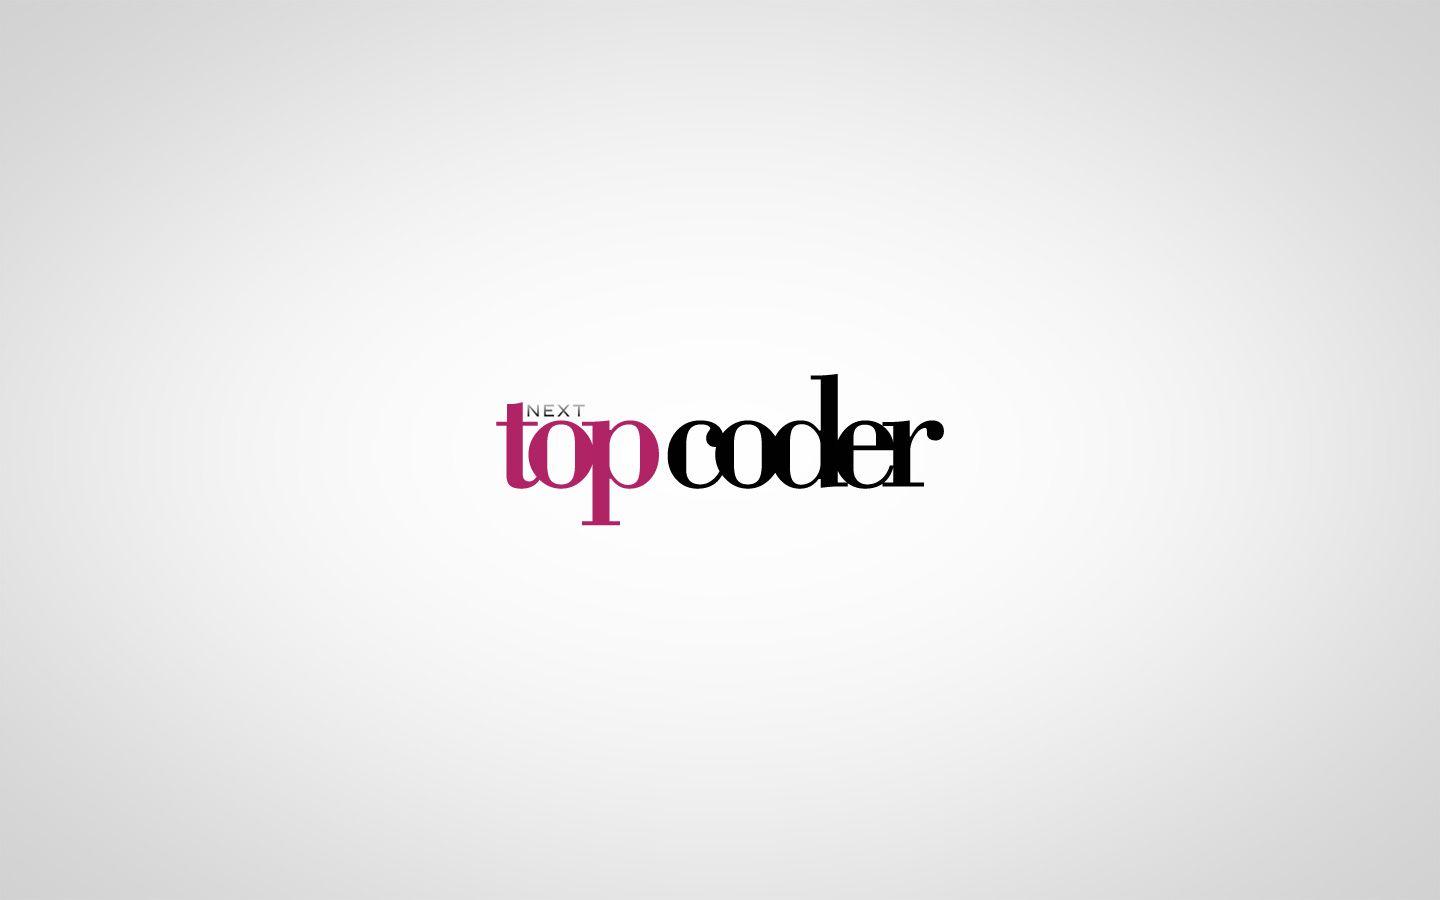 Next Top Coder